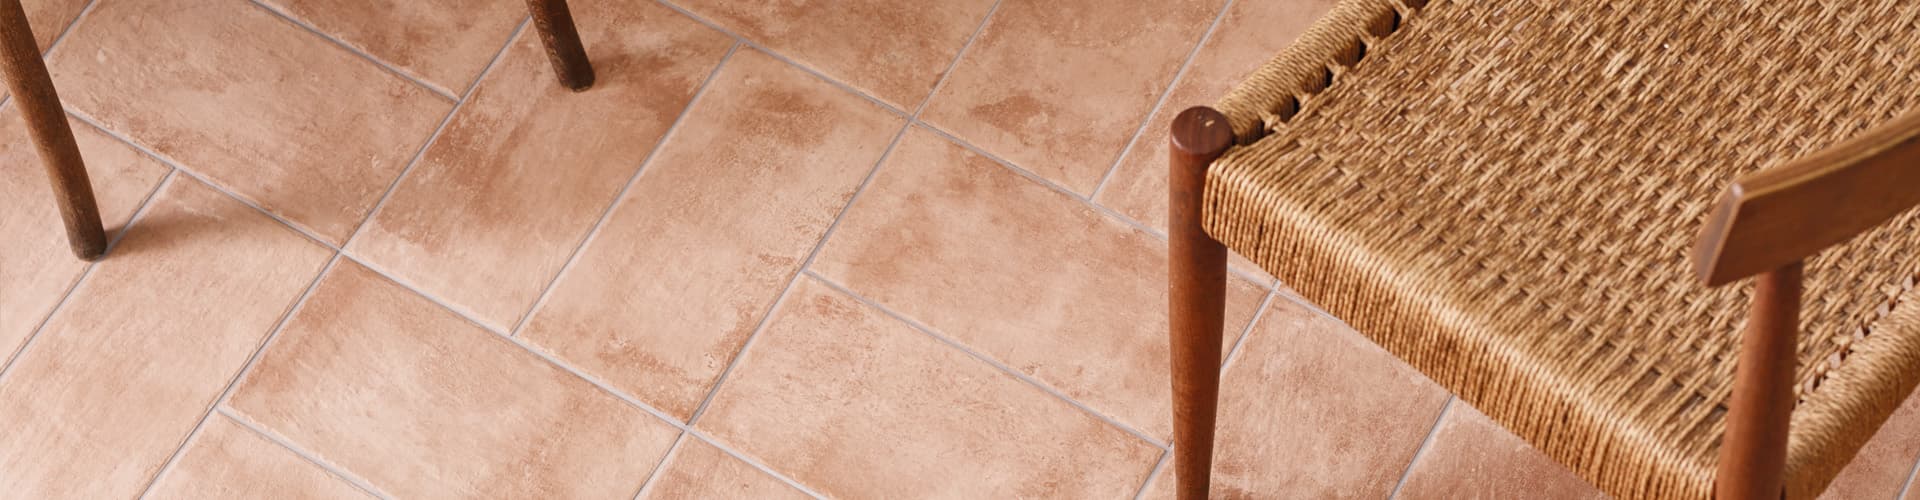 Terracotta Effect Bathroom Tiles